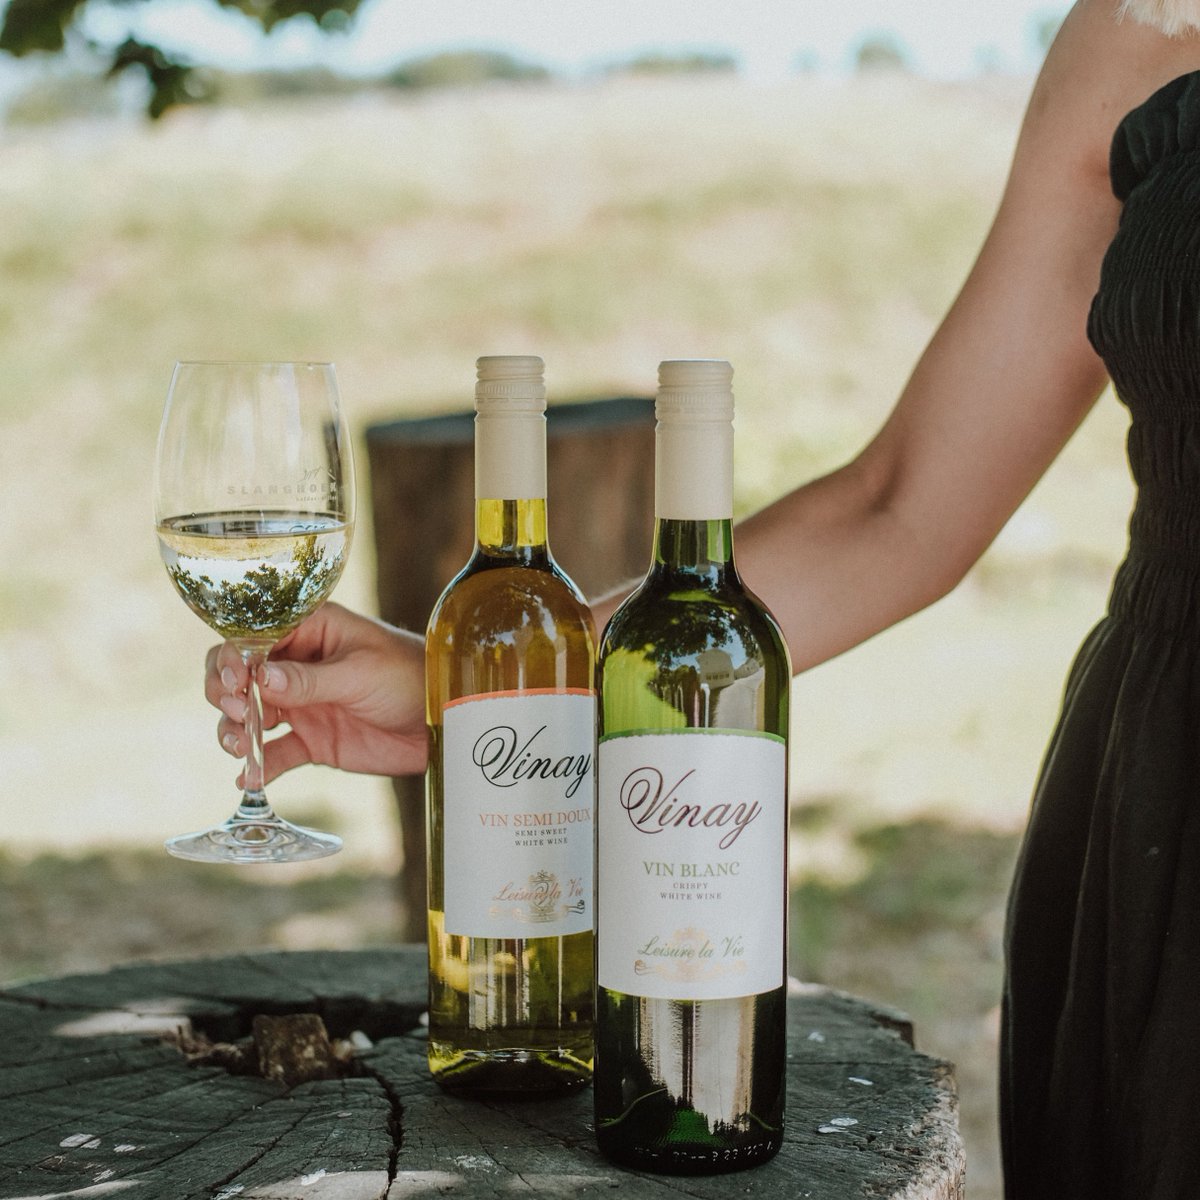 Vinay Wine Showdown! 

Semi Doux VS Vin Blanc - Which will win your heart? Taste the captivating contrast of Vinay wines. 🍇

#winelover #slanghoek #breedekloof #wine #whitewine #chardonnay #vinay #winetasting #winestagram #winery #winepairing  #wineoclock